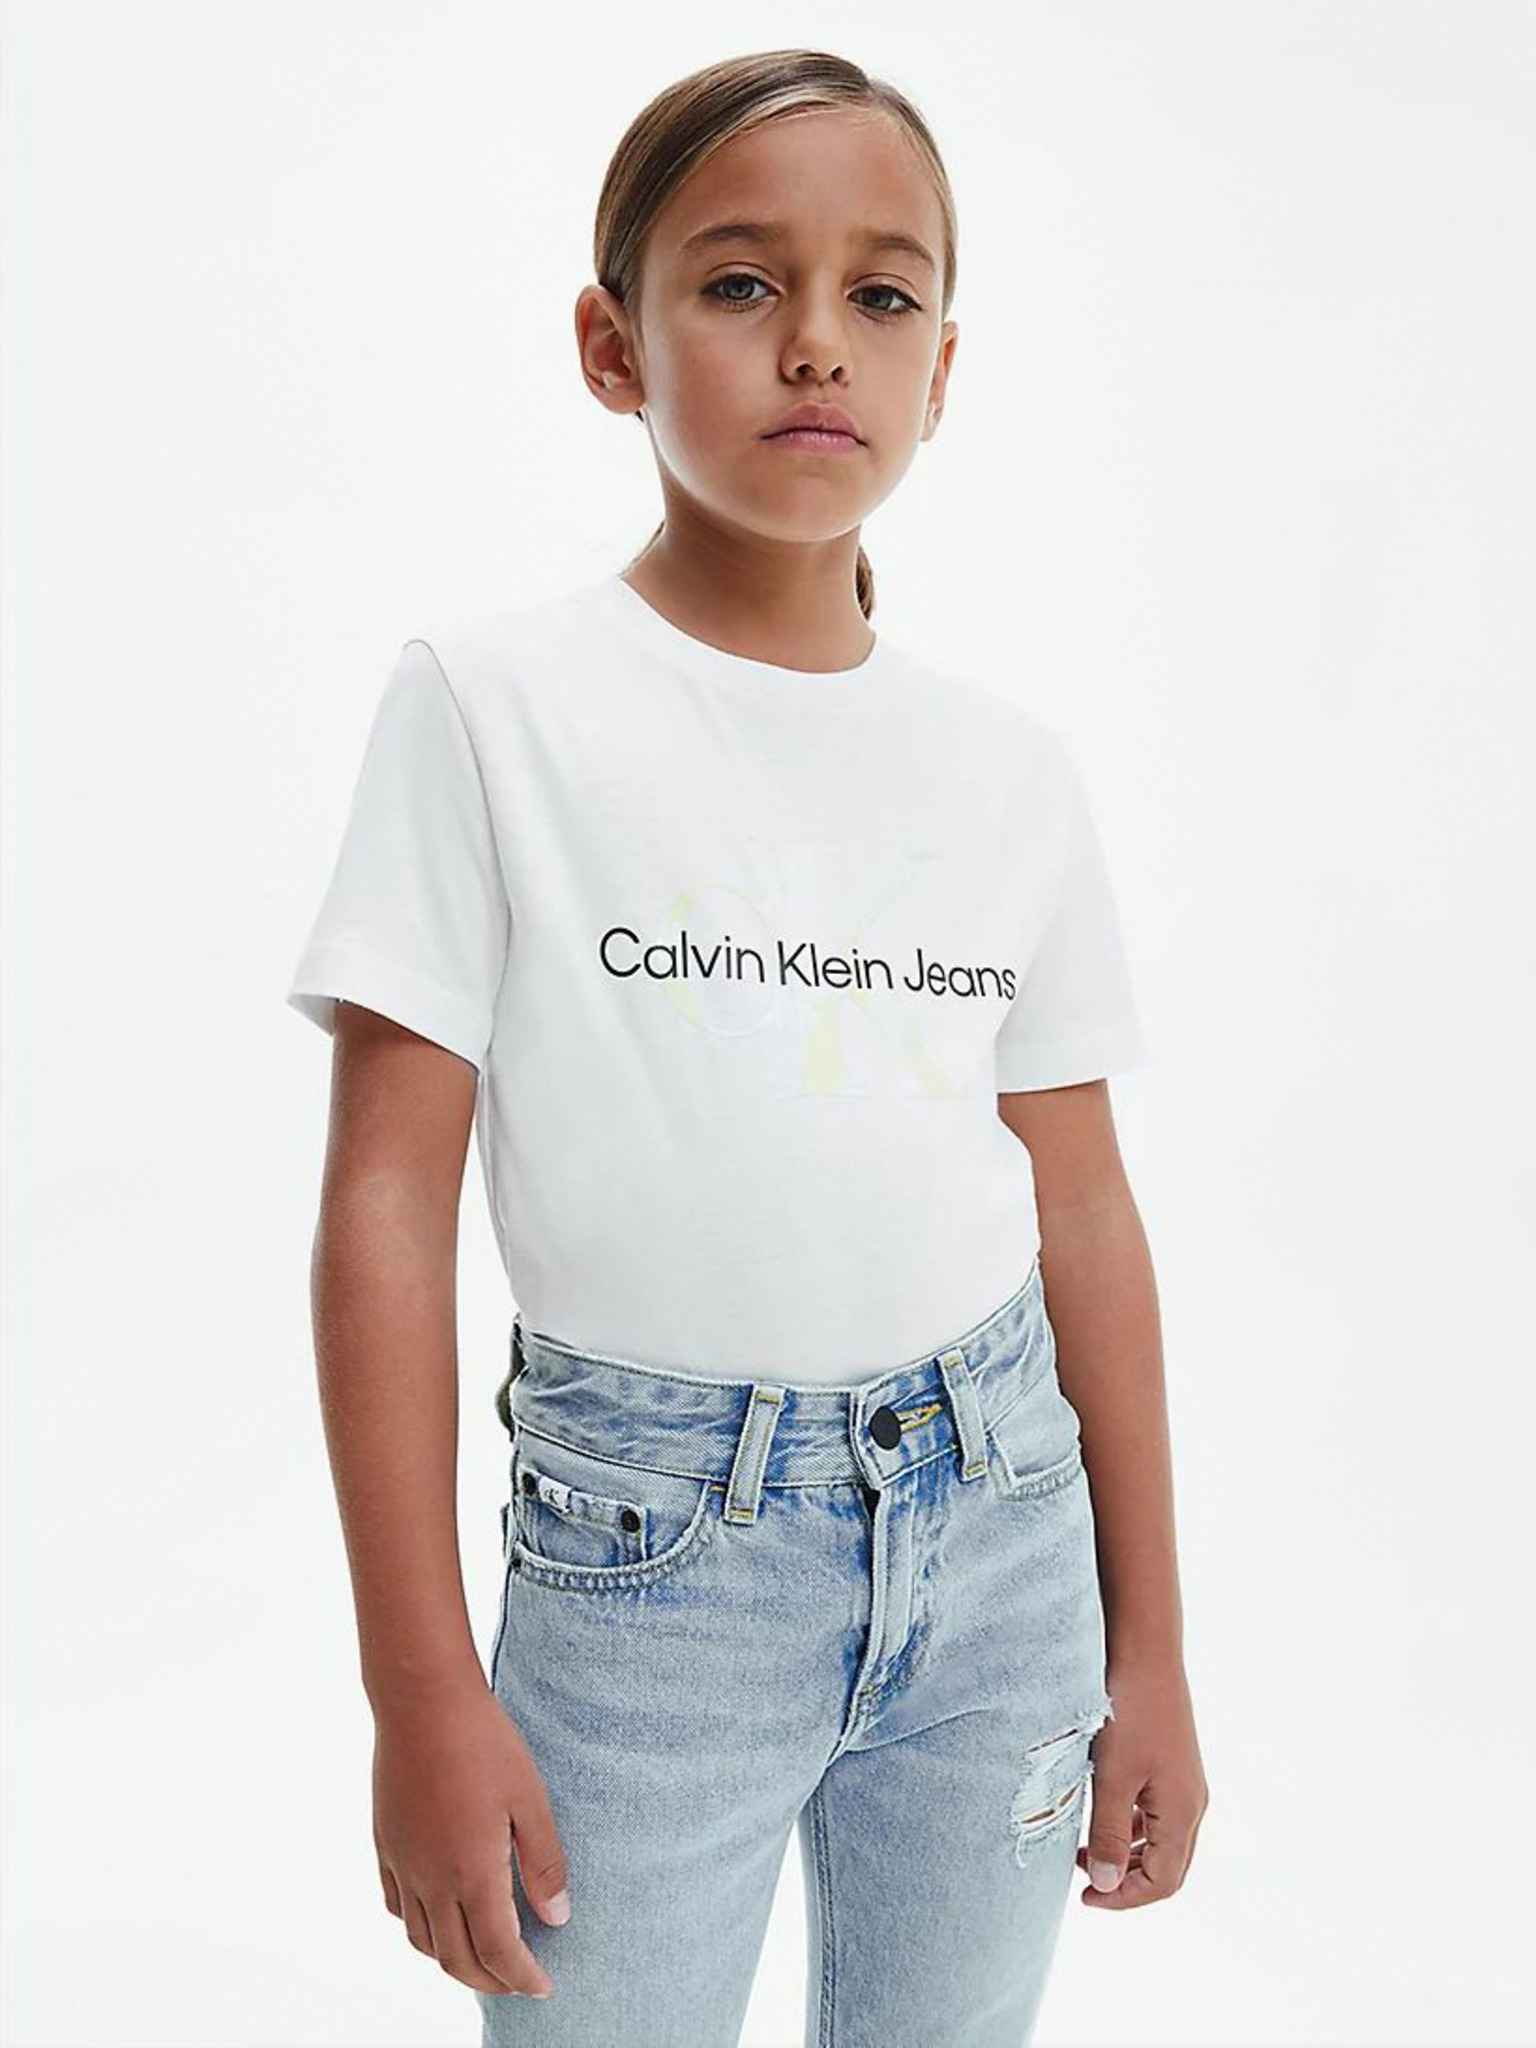 Calvin Klein Jeans Women's ORIGINAL Cotton Logo-Print T-Shirt.